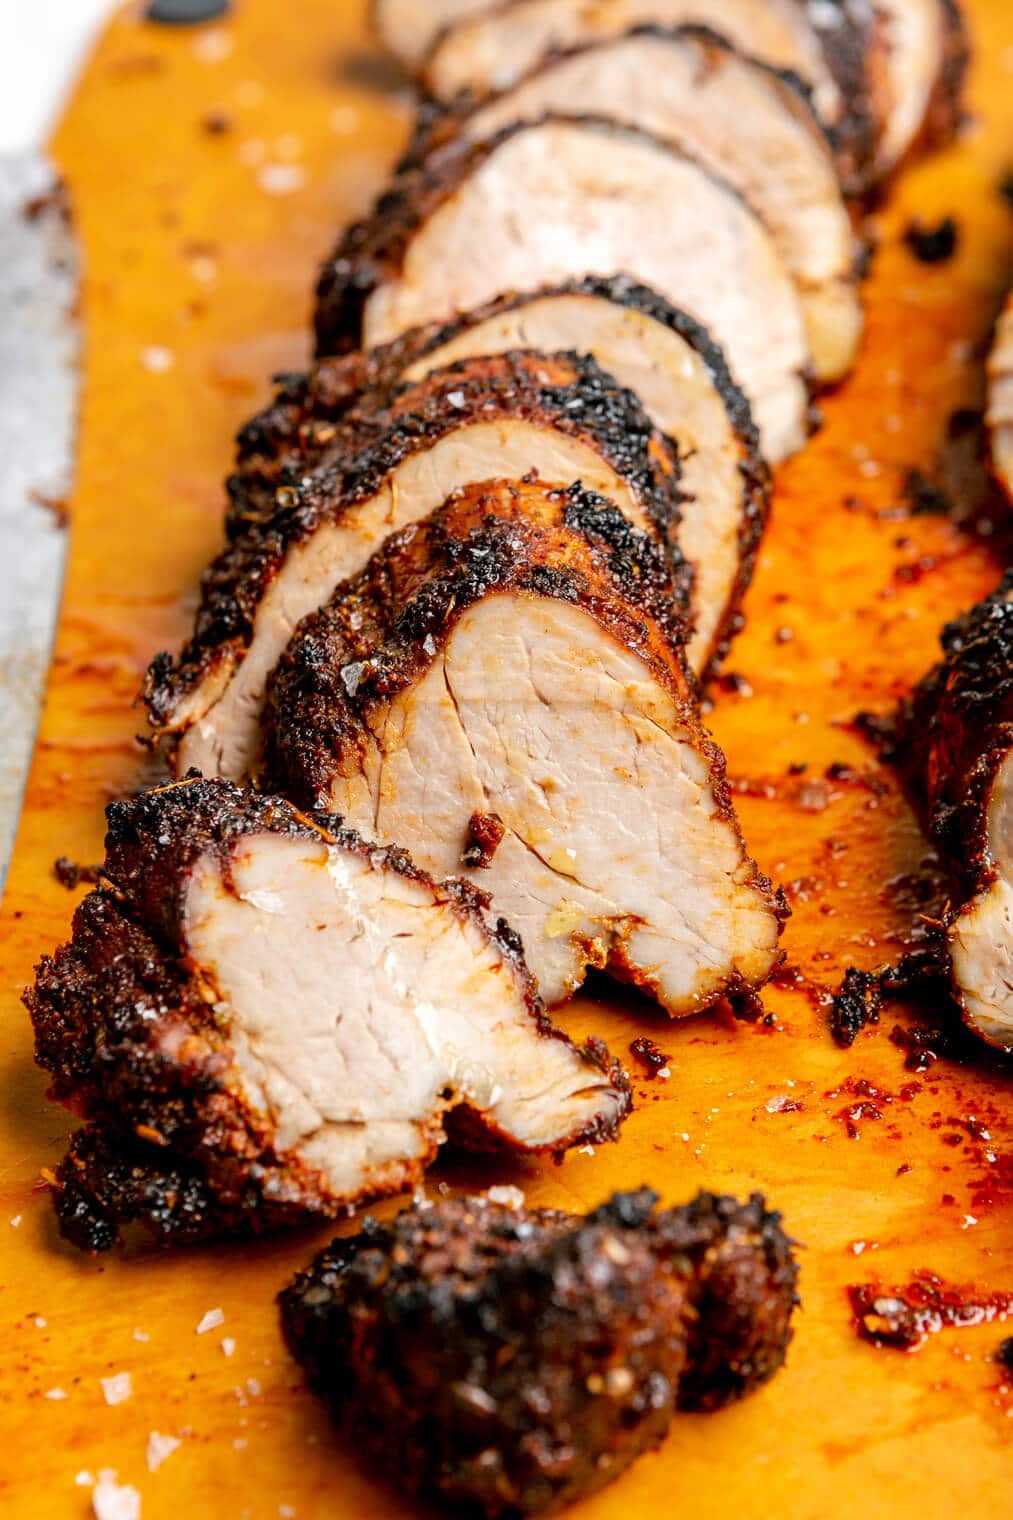 Sliced, spiced pork tenderloin on an epicurean cutting board.